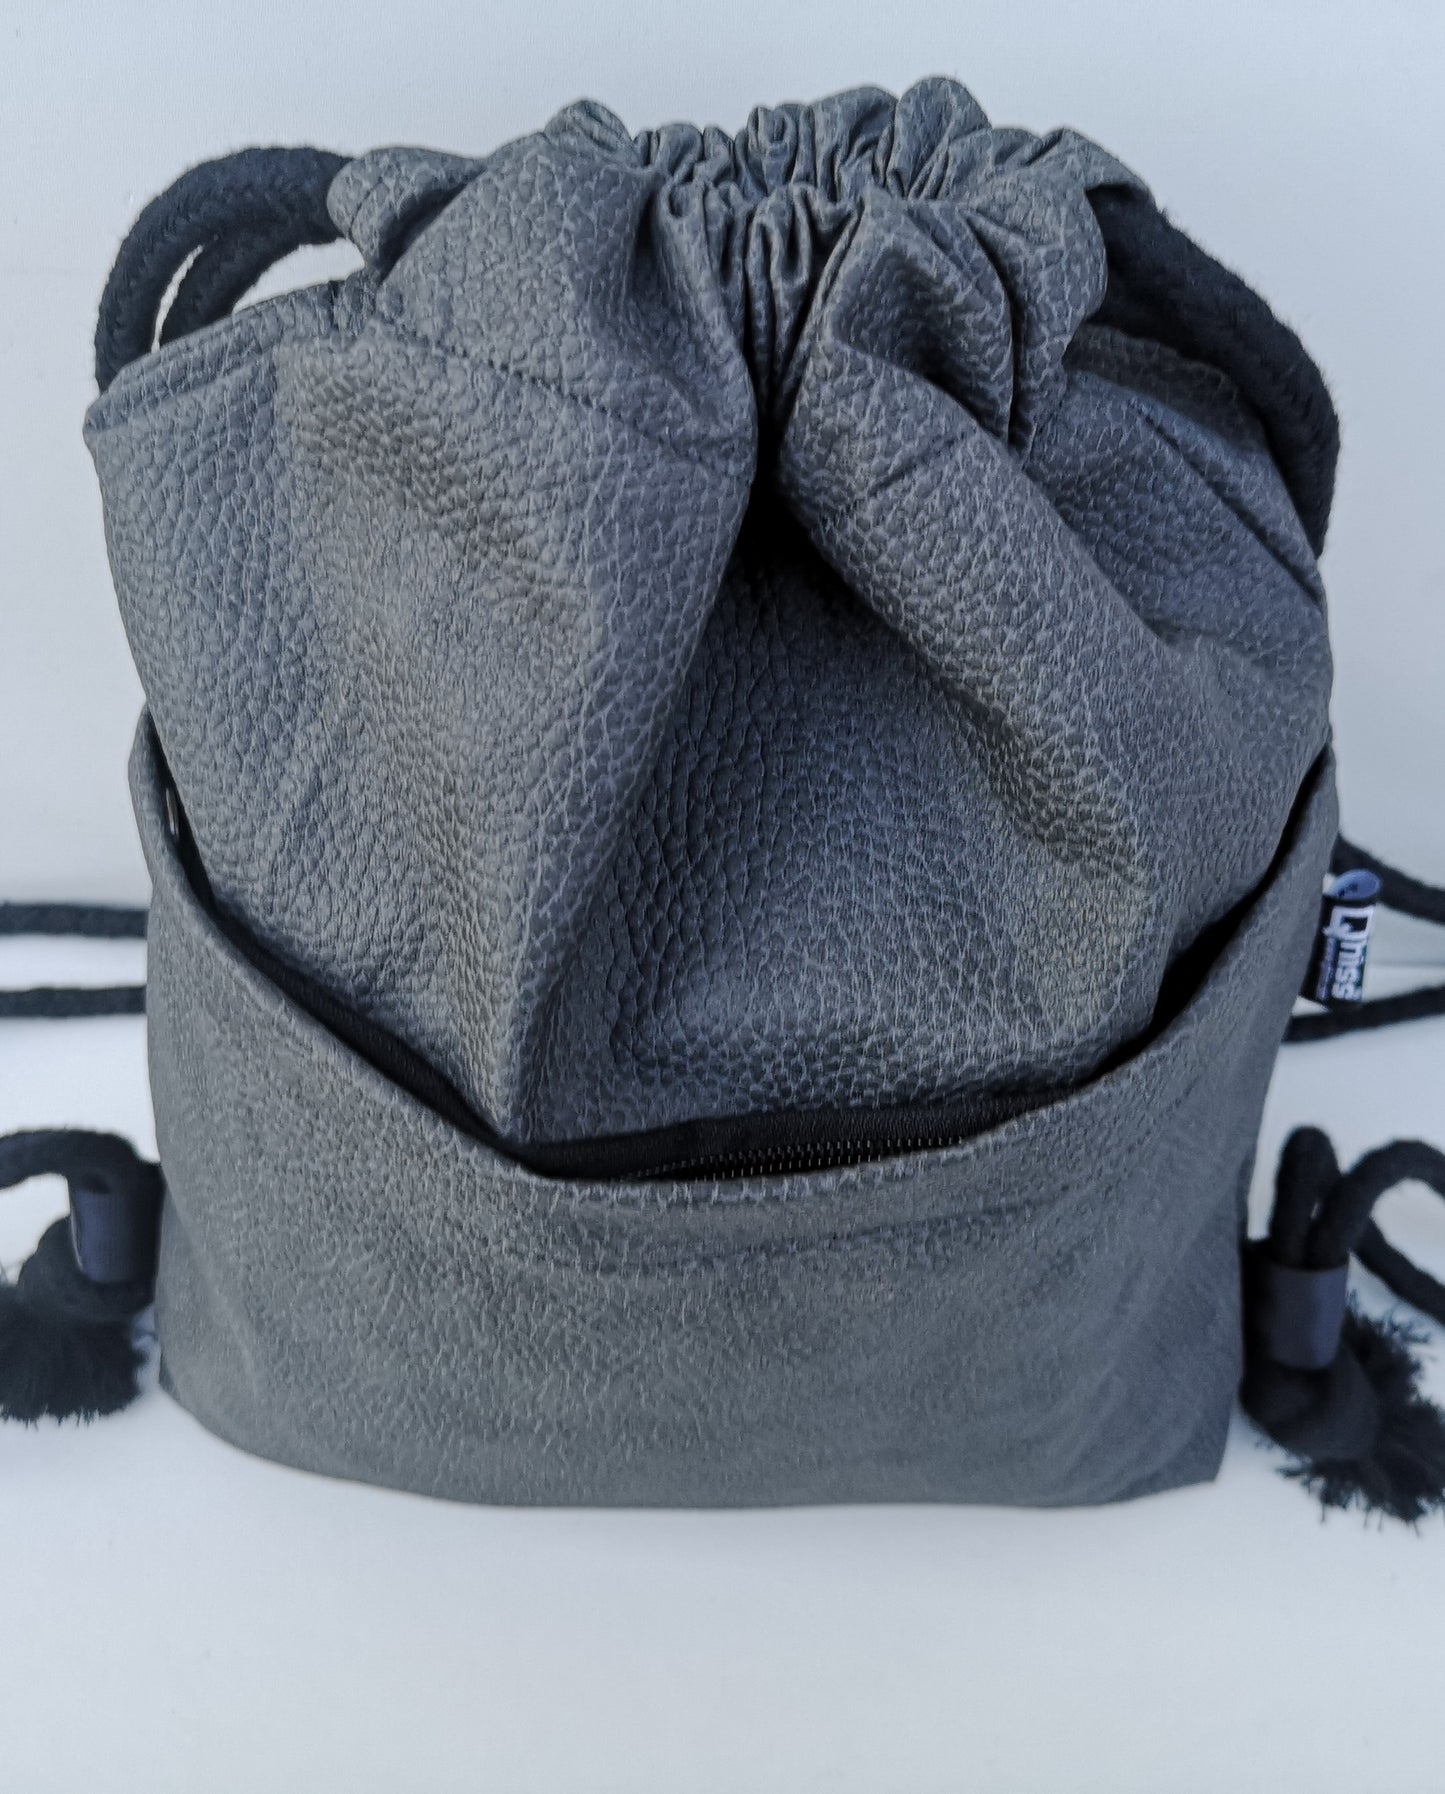 Drawstring Bag in vegan Leather Desert Grey